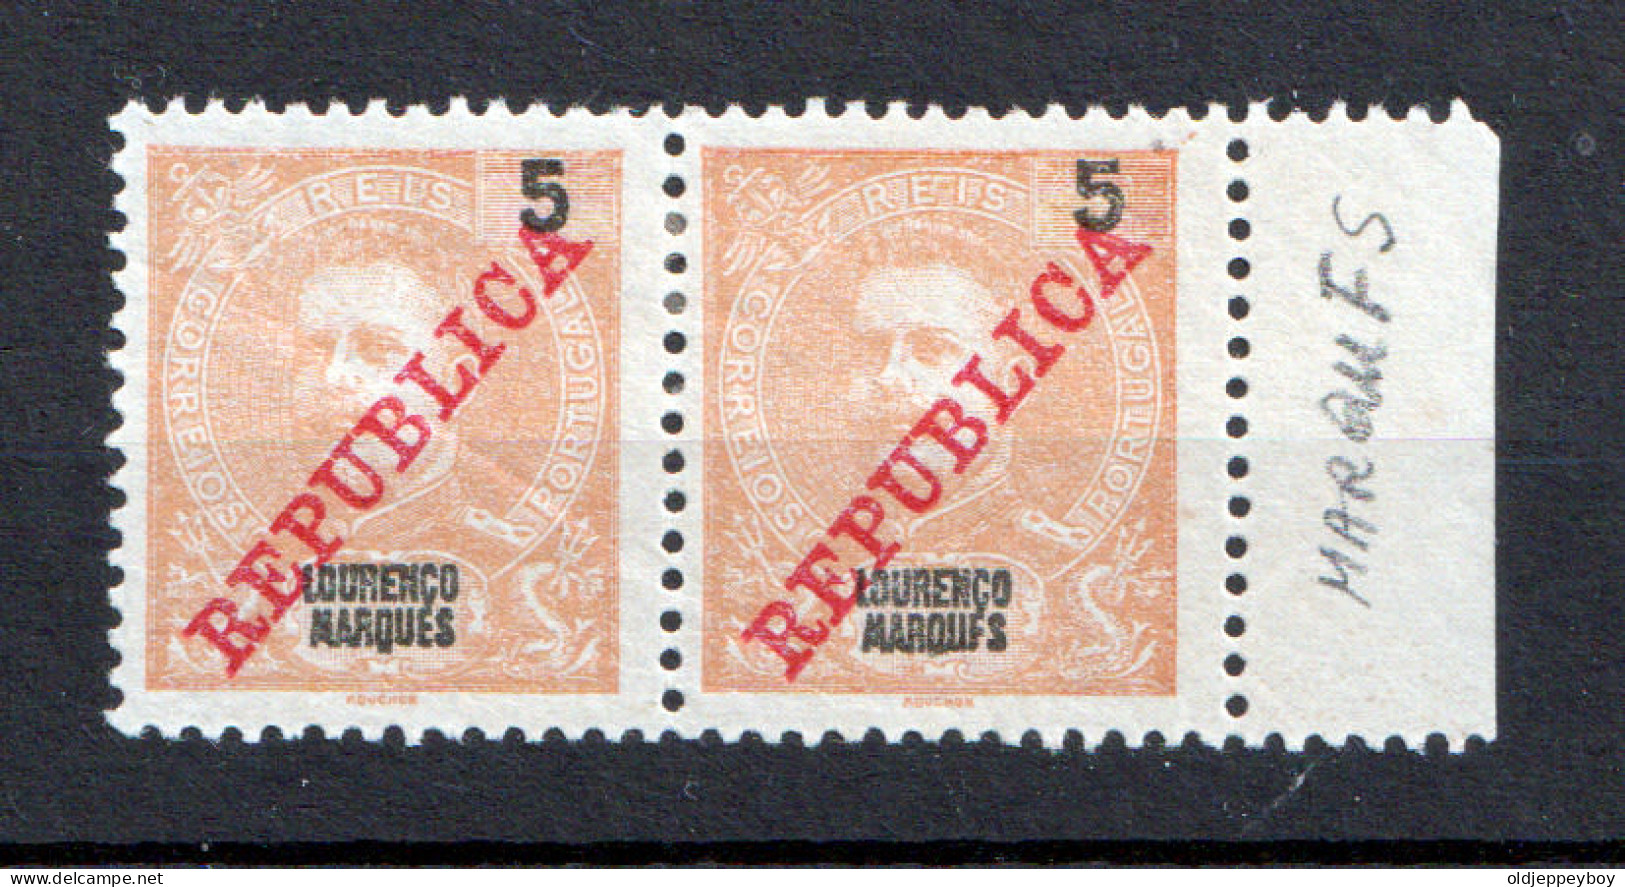 ERROR VARIETY 2 X Lourenço Marques LORENZO MARQUES 1911 D. Carlos I Variedade ERROR  MARQUFS Variety Instead Of MARQUES - Unused Stamps